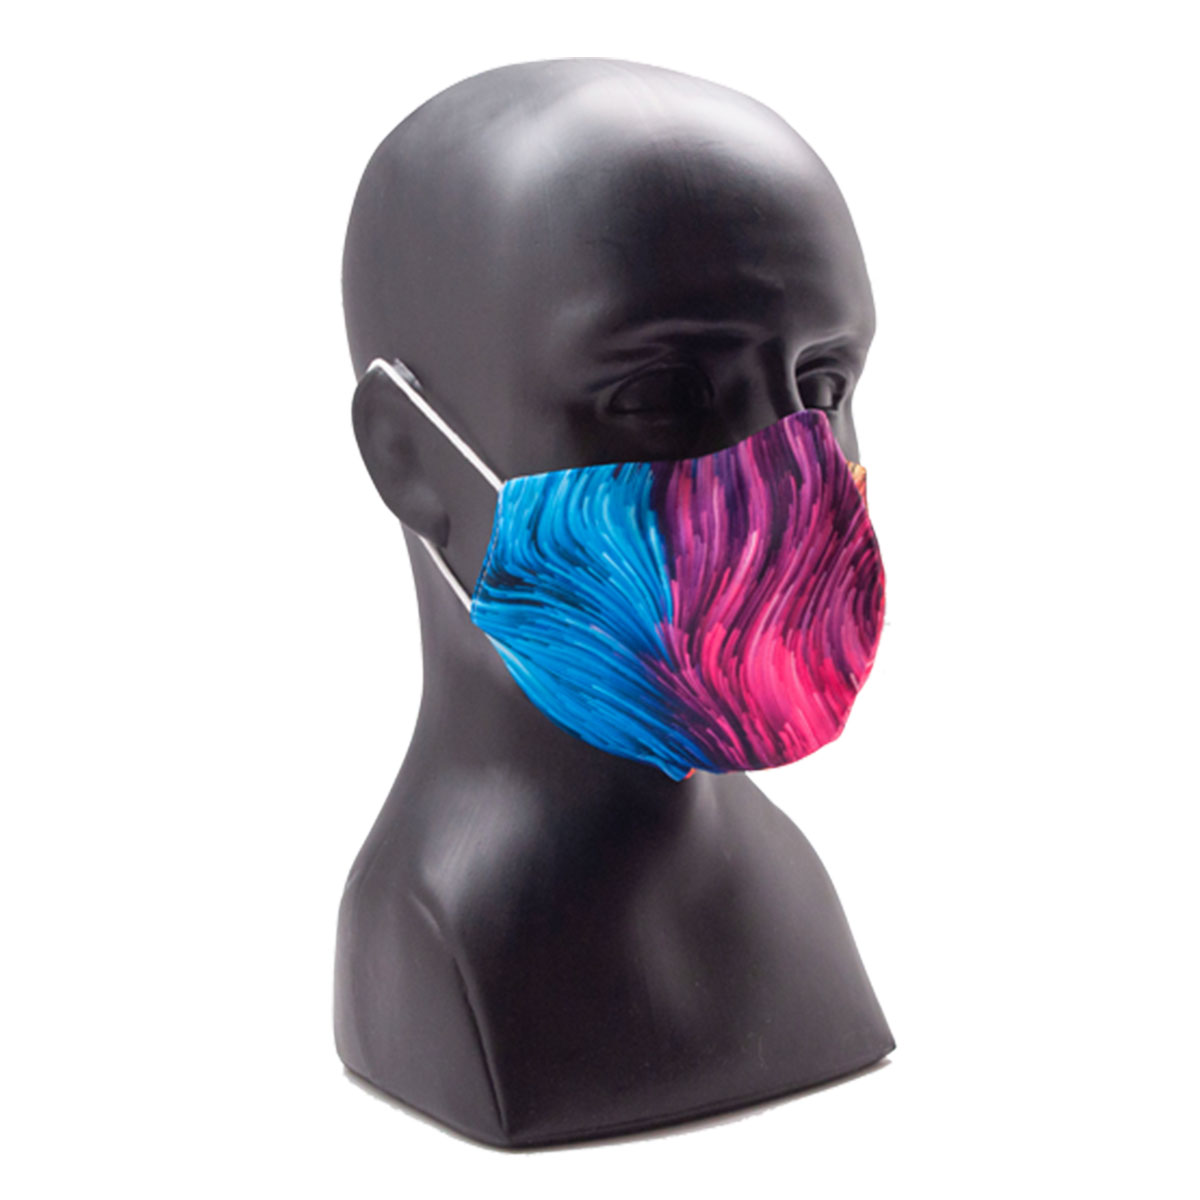 FFP2 protective mask